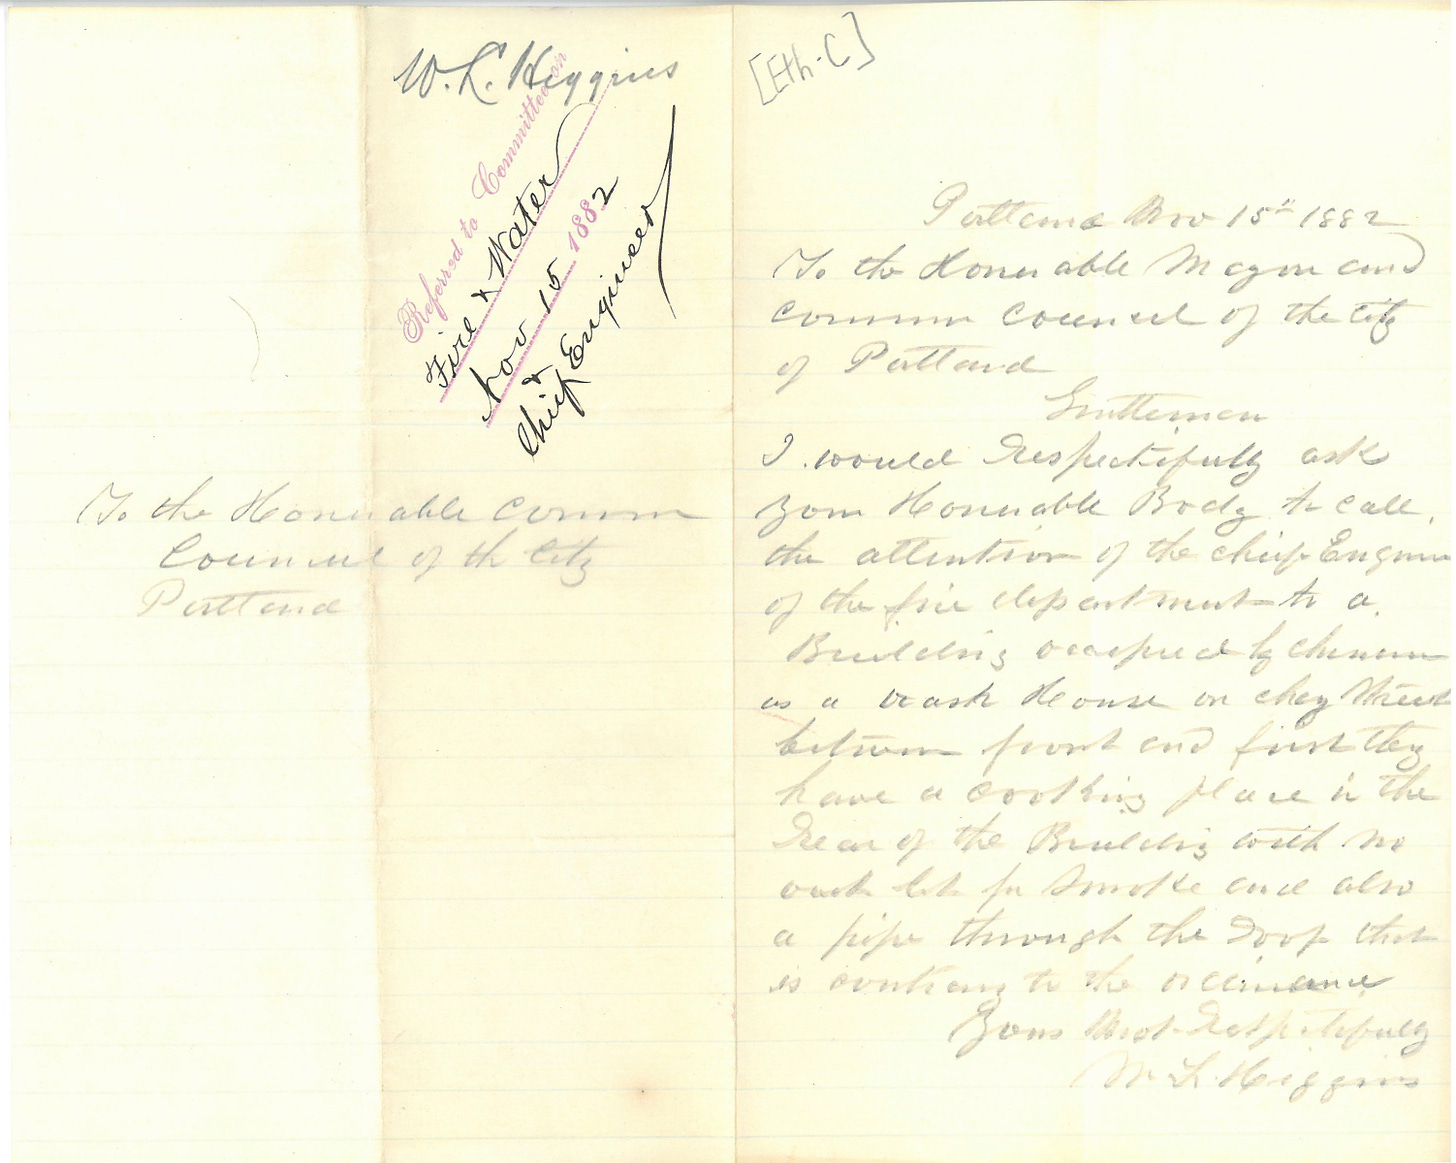 Hand written document from 1882